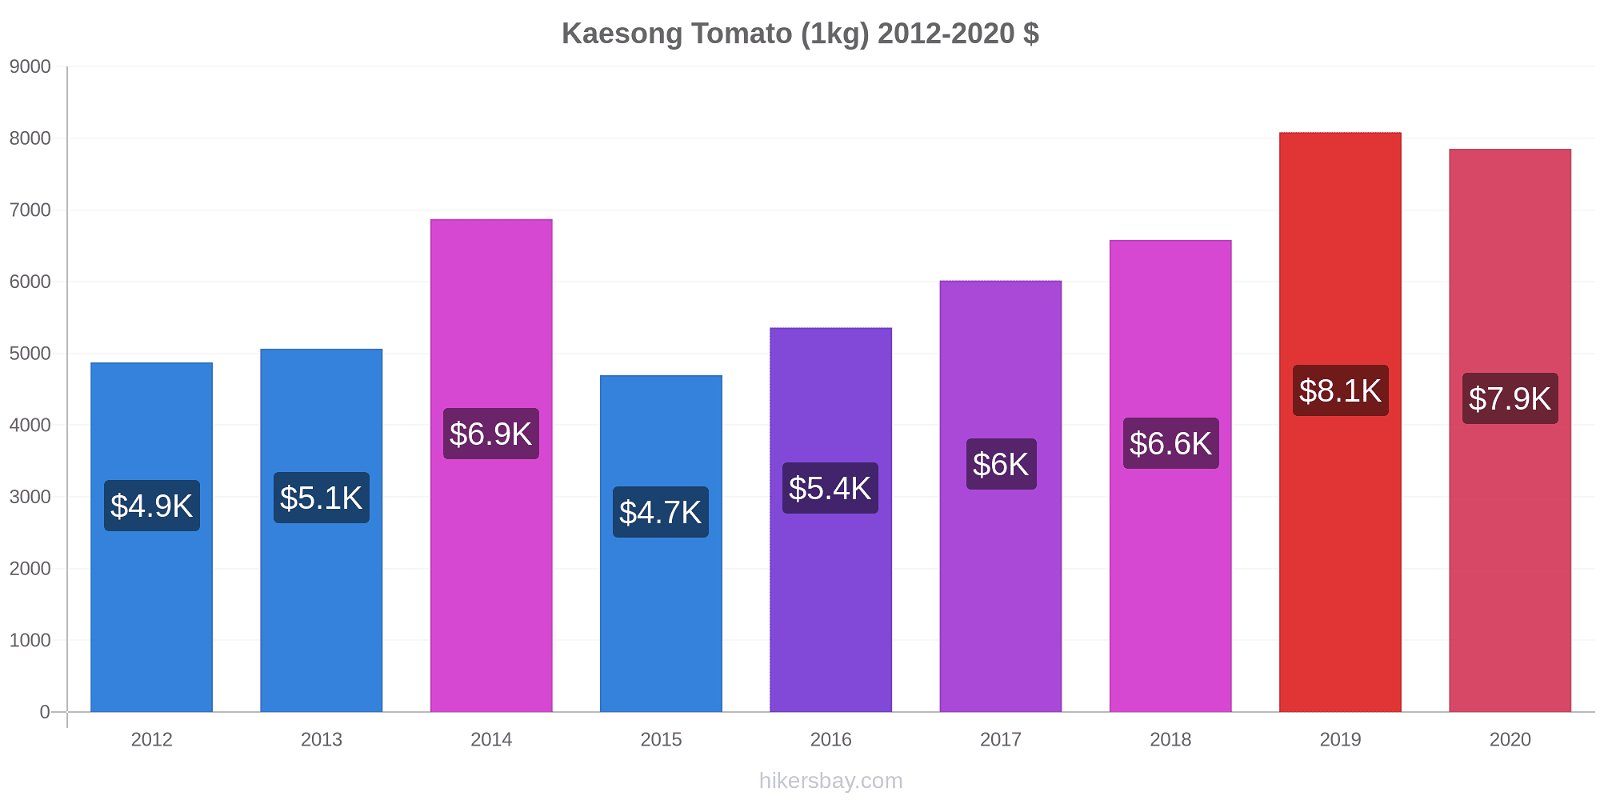 Kaesong price changes Tomato (1kg) hikersbay.com